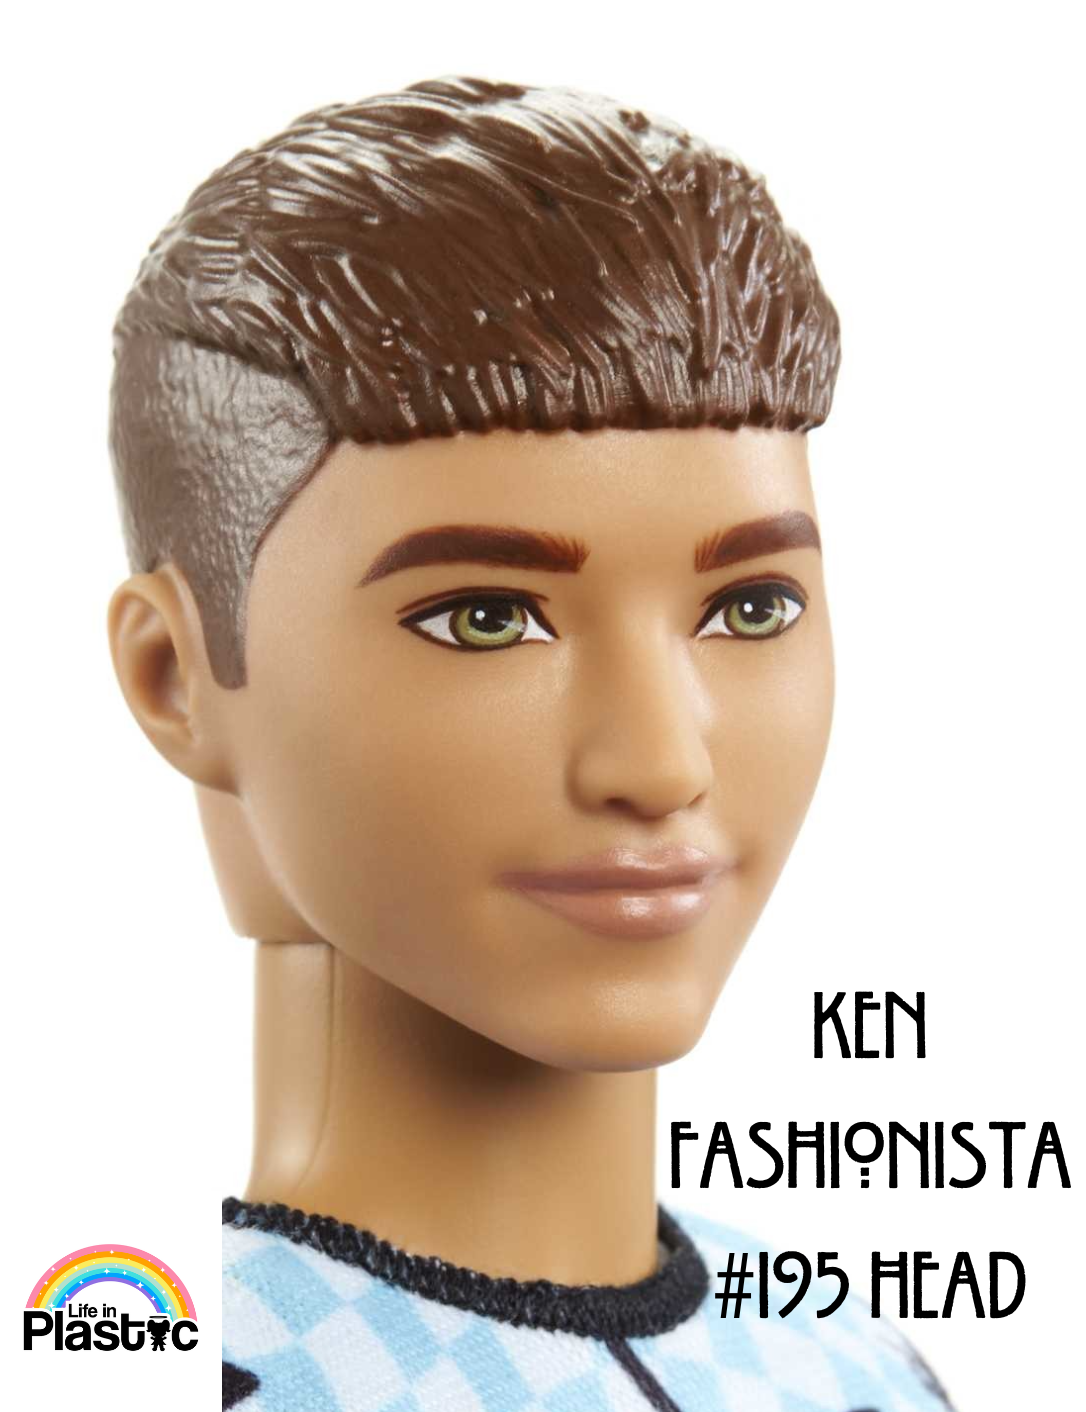 Ken Fashionista #195 Head